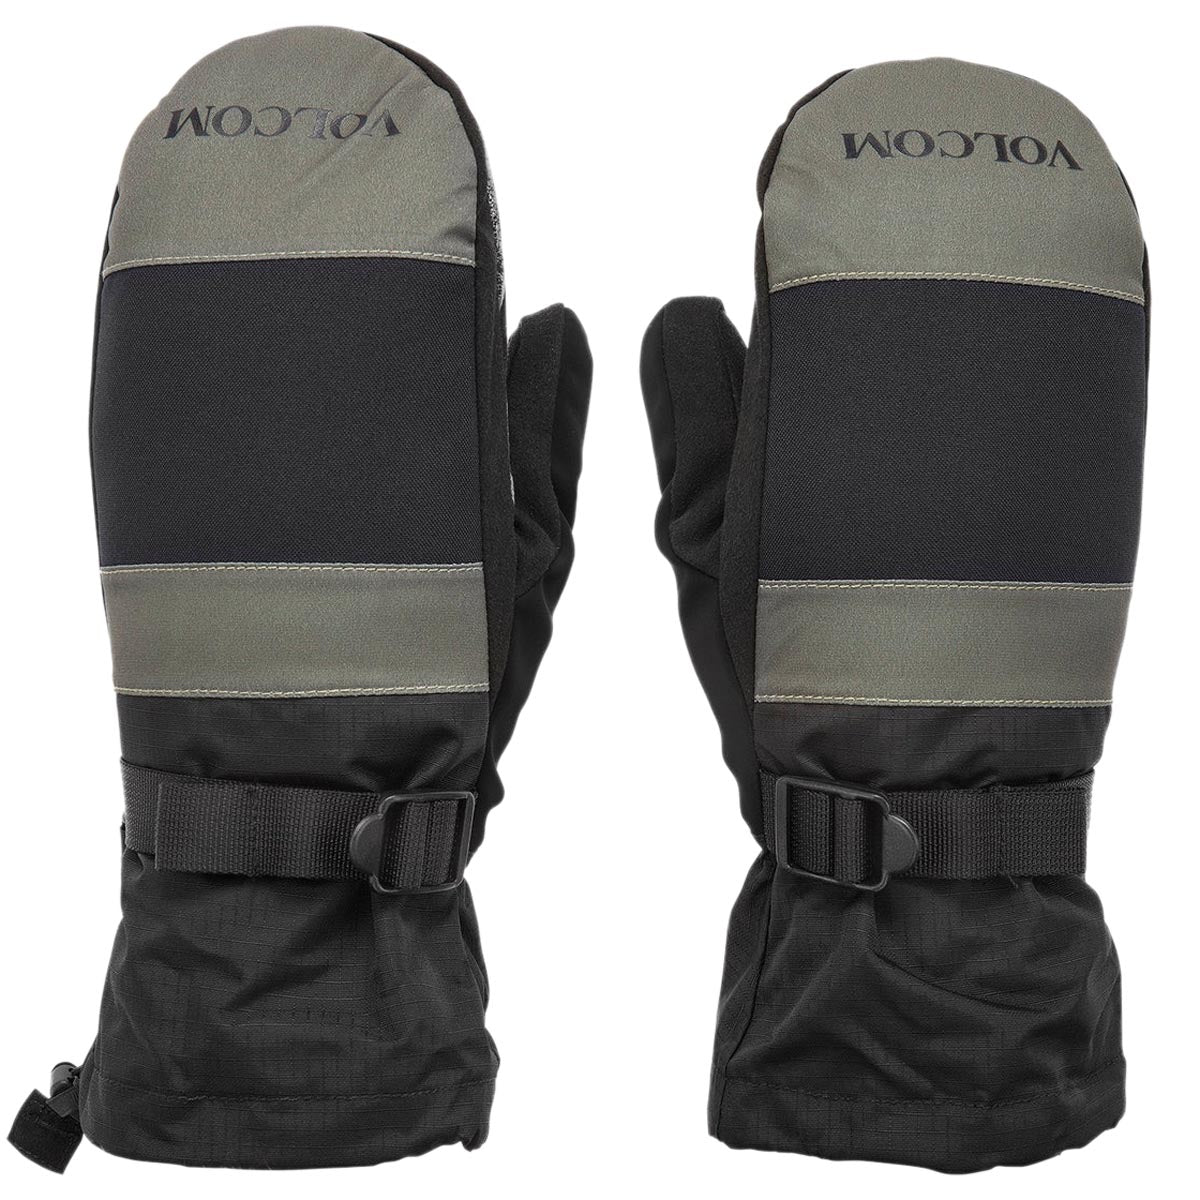 Volcom Millicent Mitt Snowboard Gloves - Light Military image 1